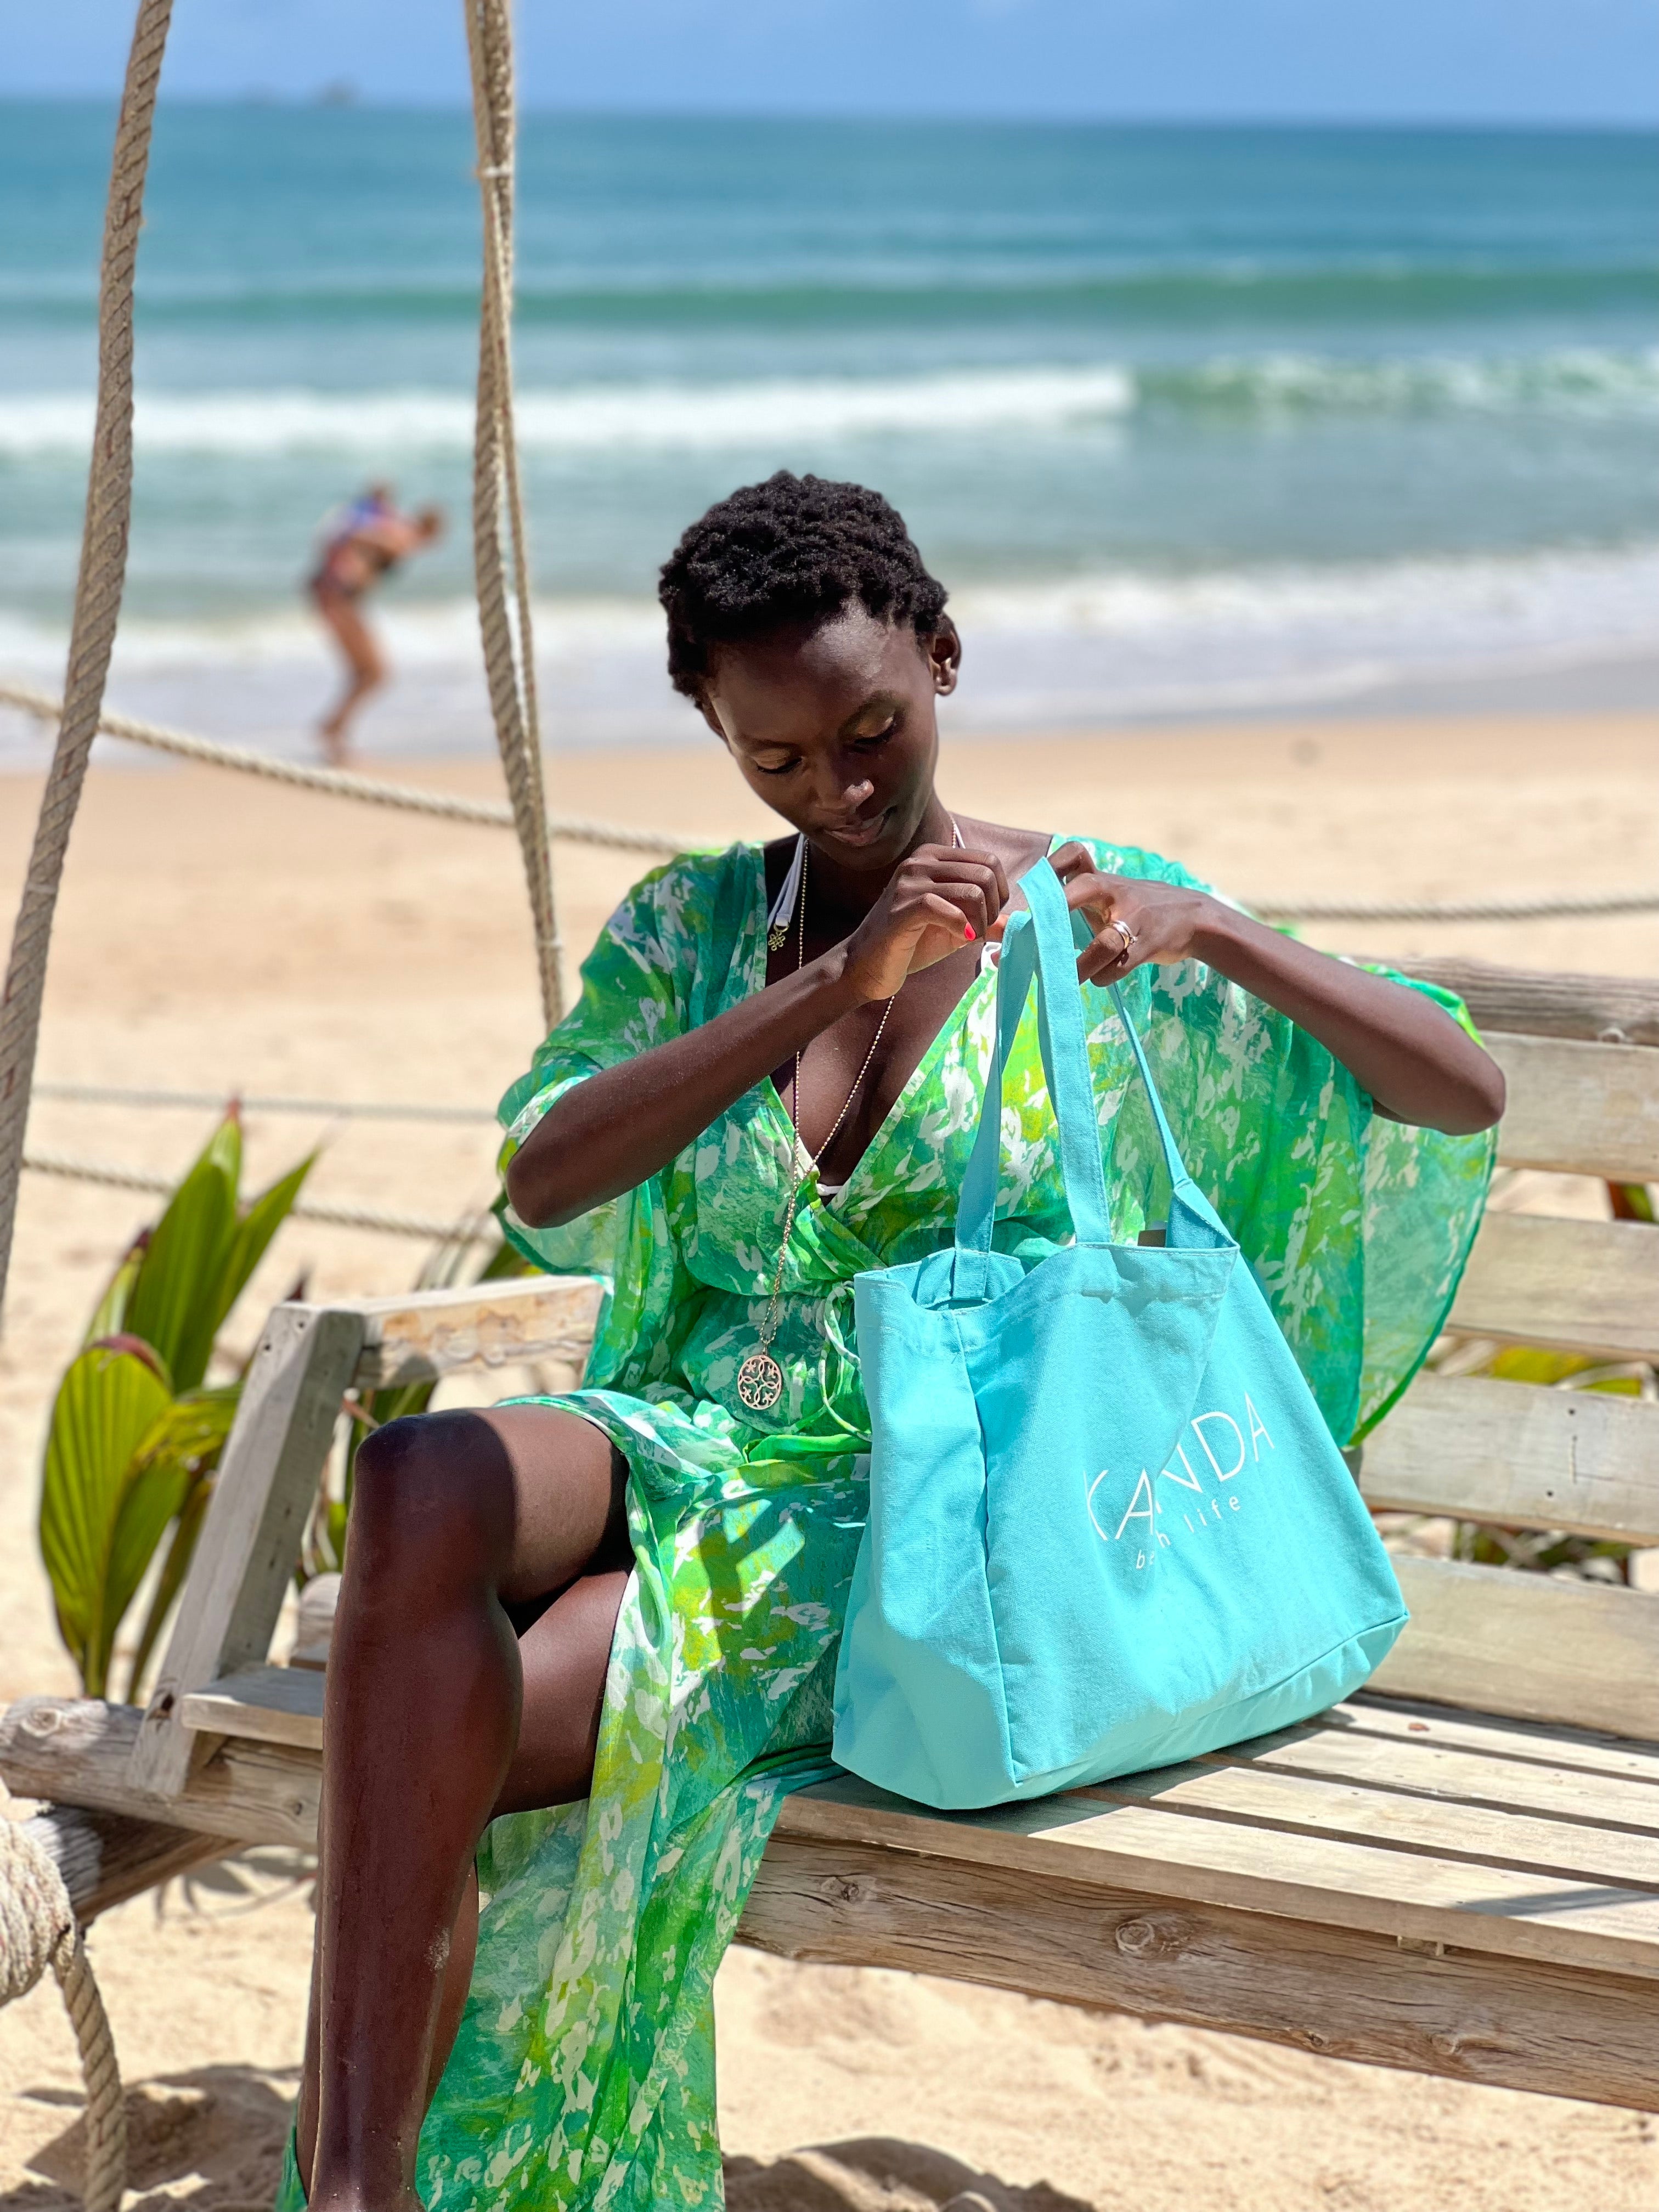 Kaanda Beach Bag - Turquoise Color